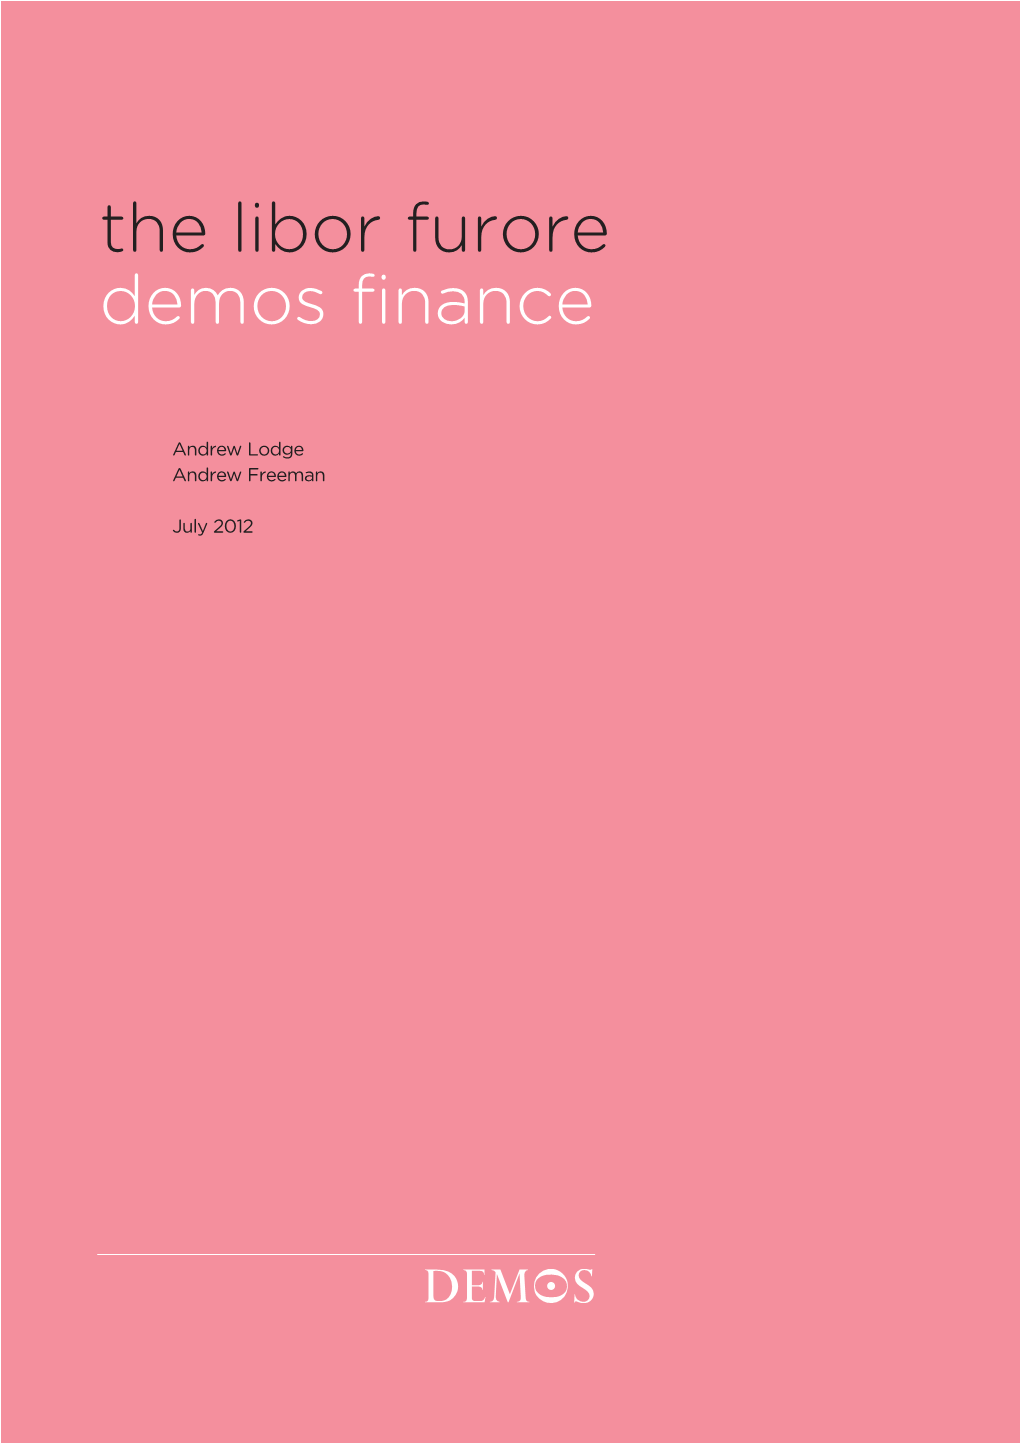 The Libor Furore Demos Finance